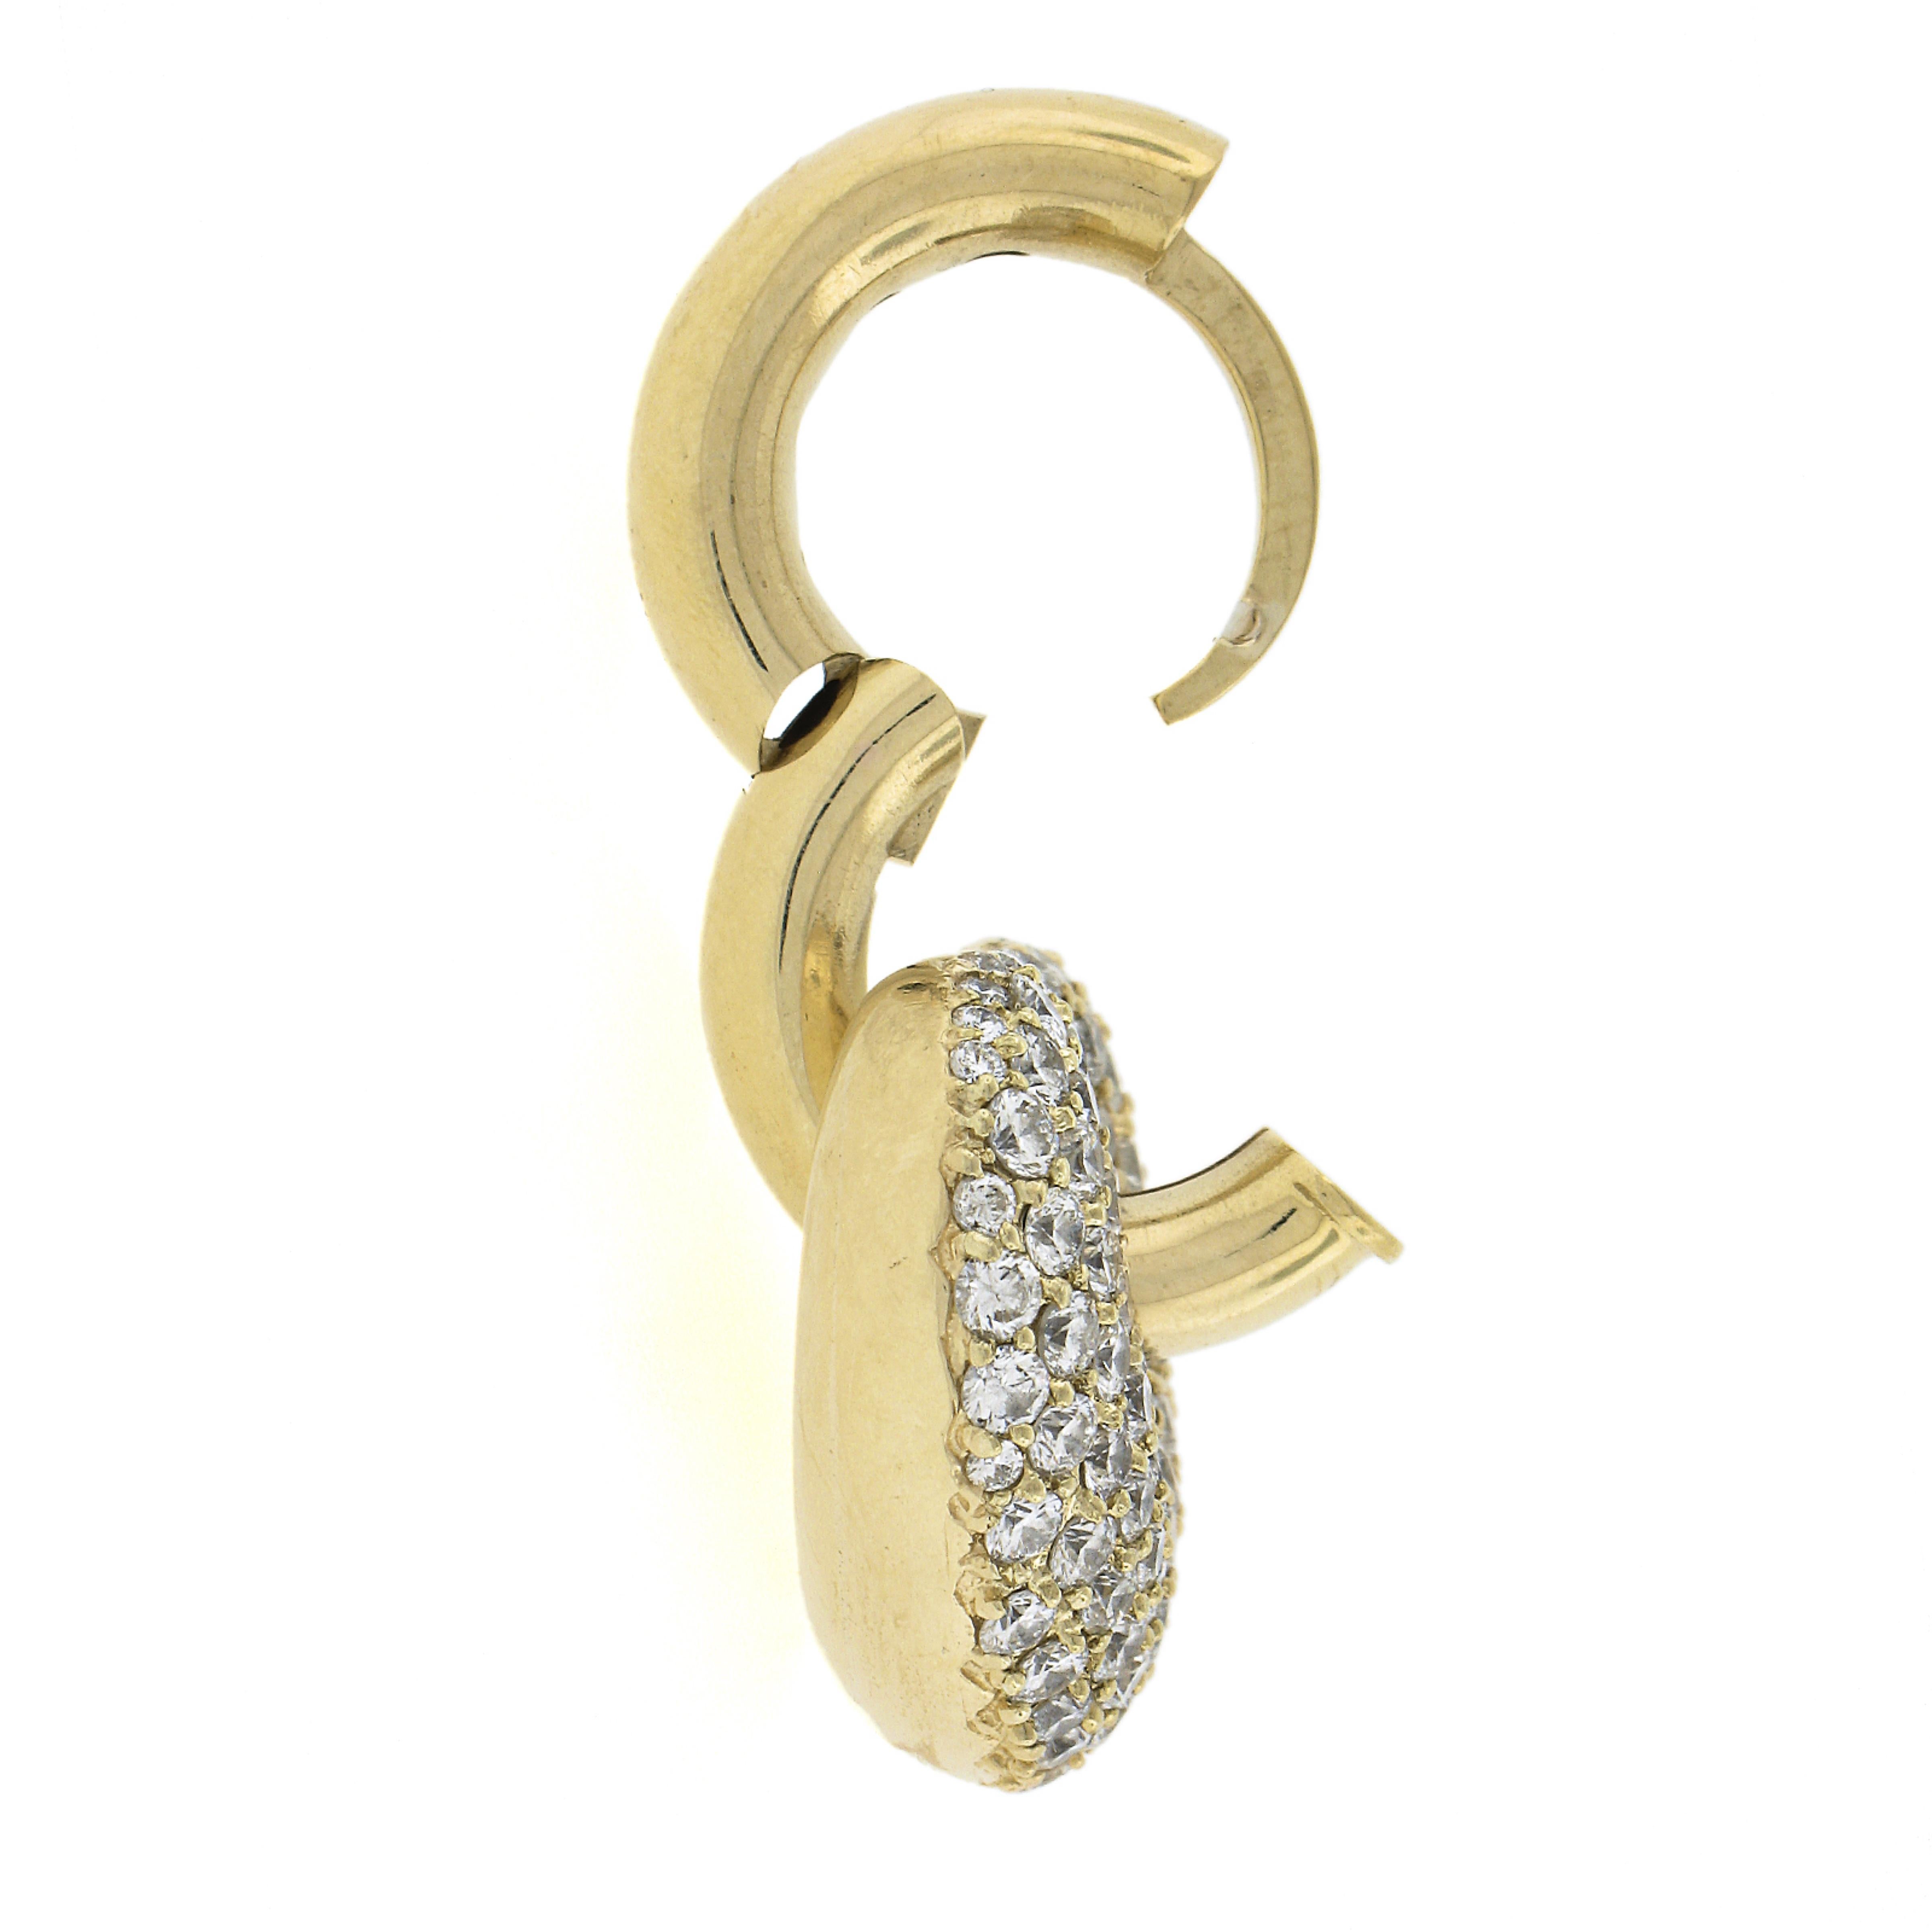 Women's 18K Yellow Gold 5ctw Diamond Puffed Heart Charm Pendant w/ Large Enhancer Bail For Sale